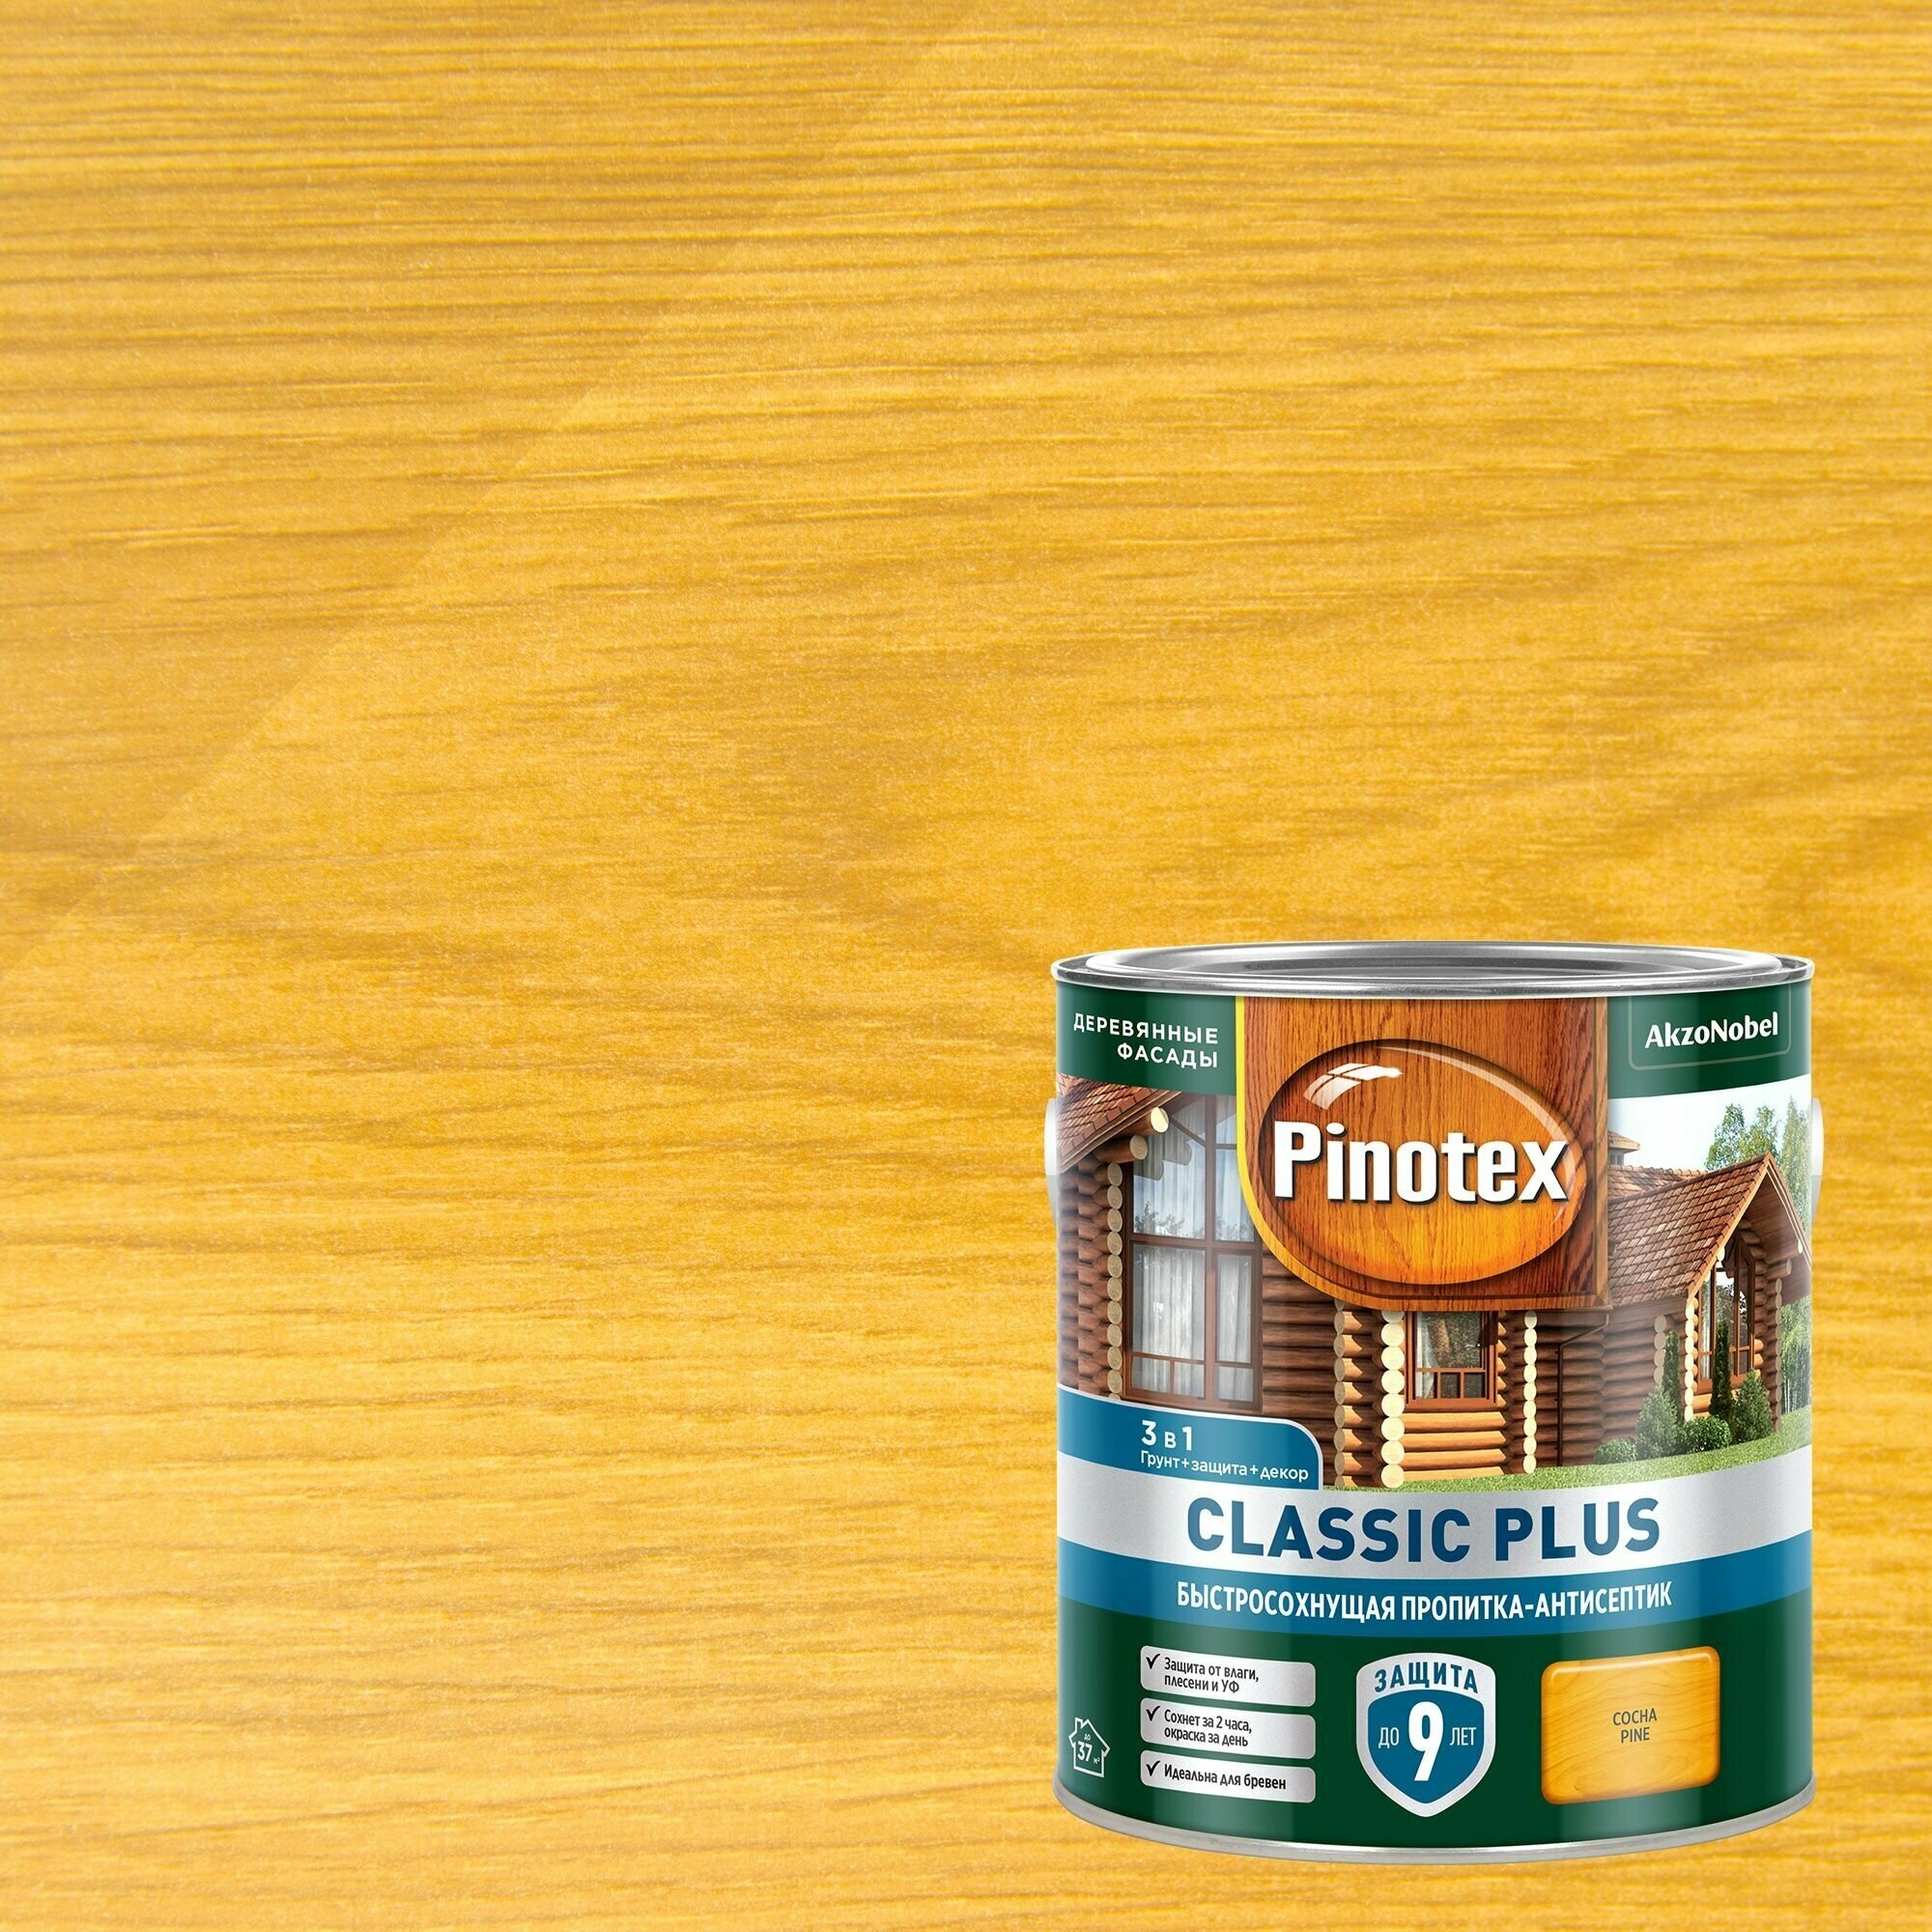 PINOTEX CLASSIC PLUS пропитка-антисептик быстросохнущая 3 в 1, сосна (0,9л)